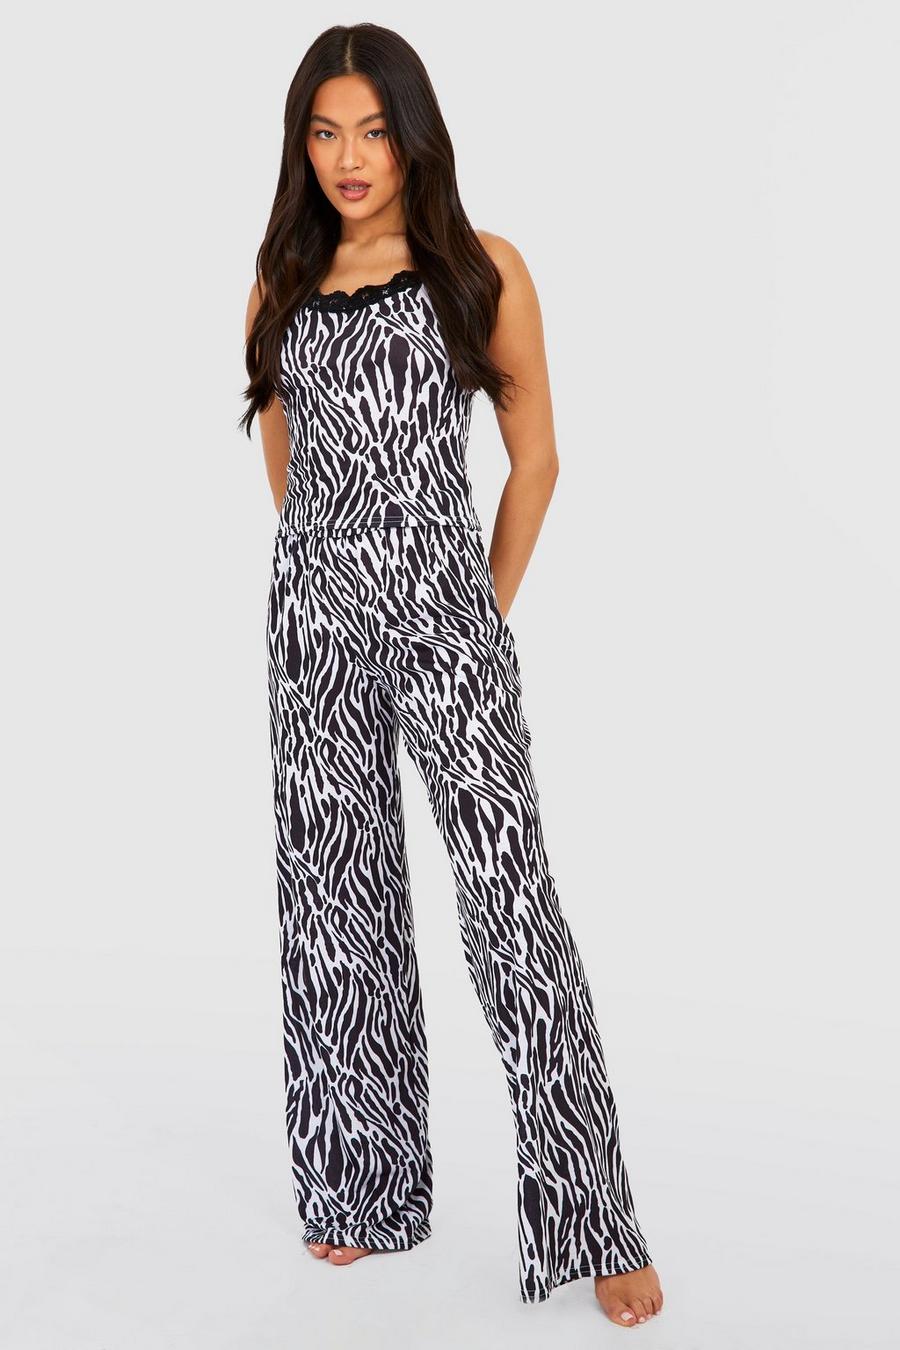 Black_white Zebra Print Cami And Pants Pajama Set image number 1